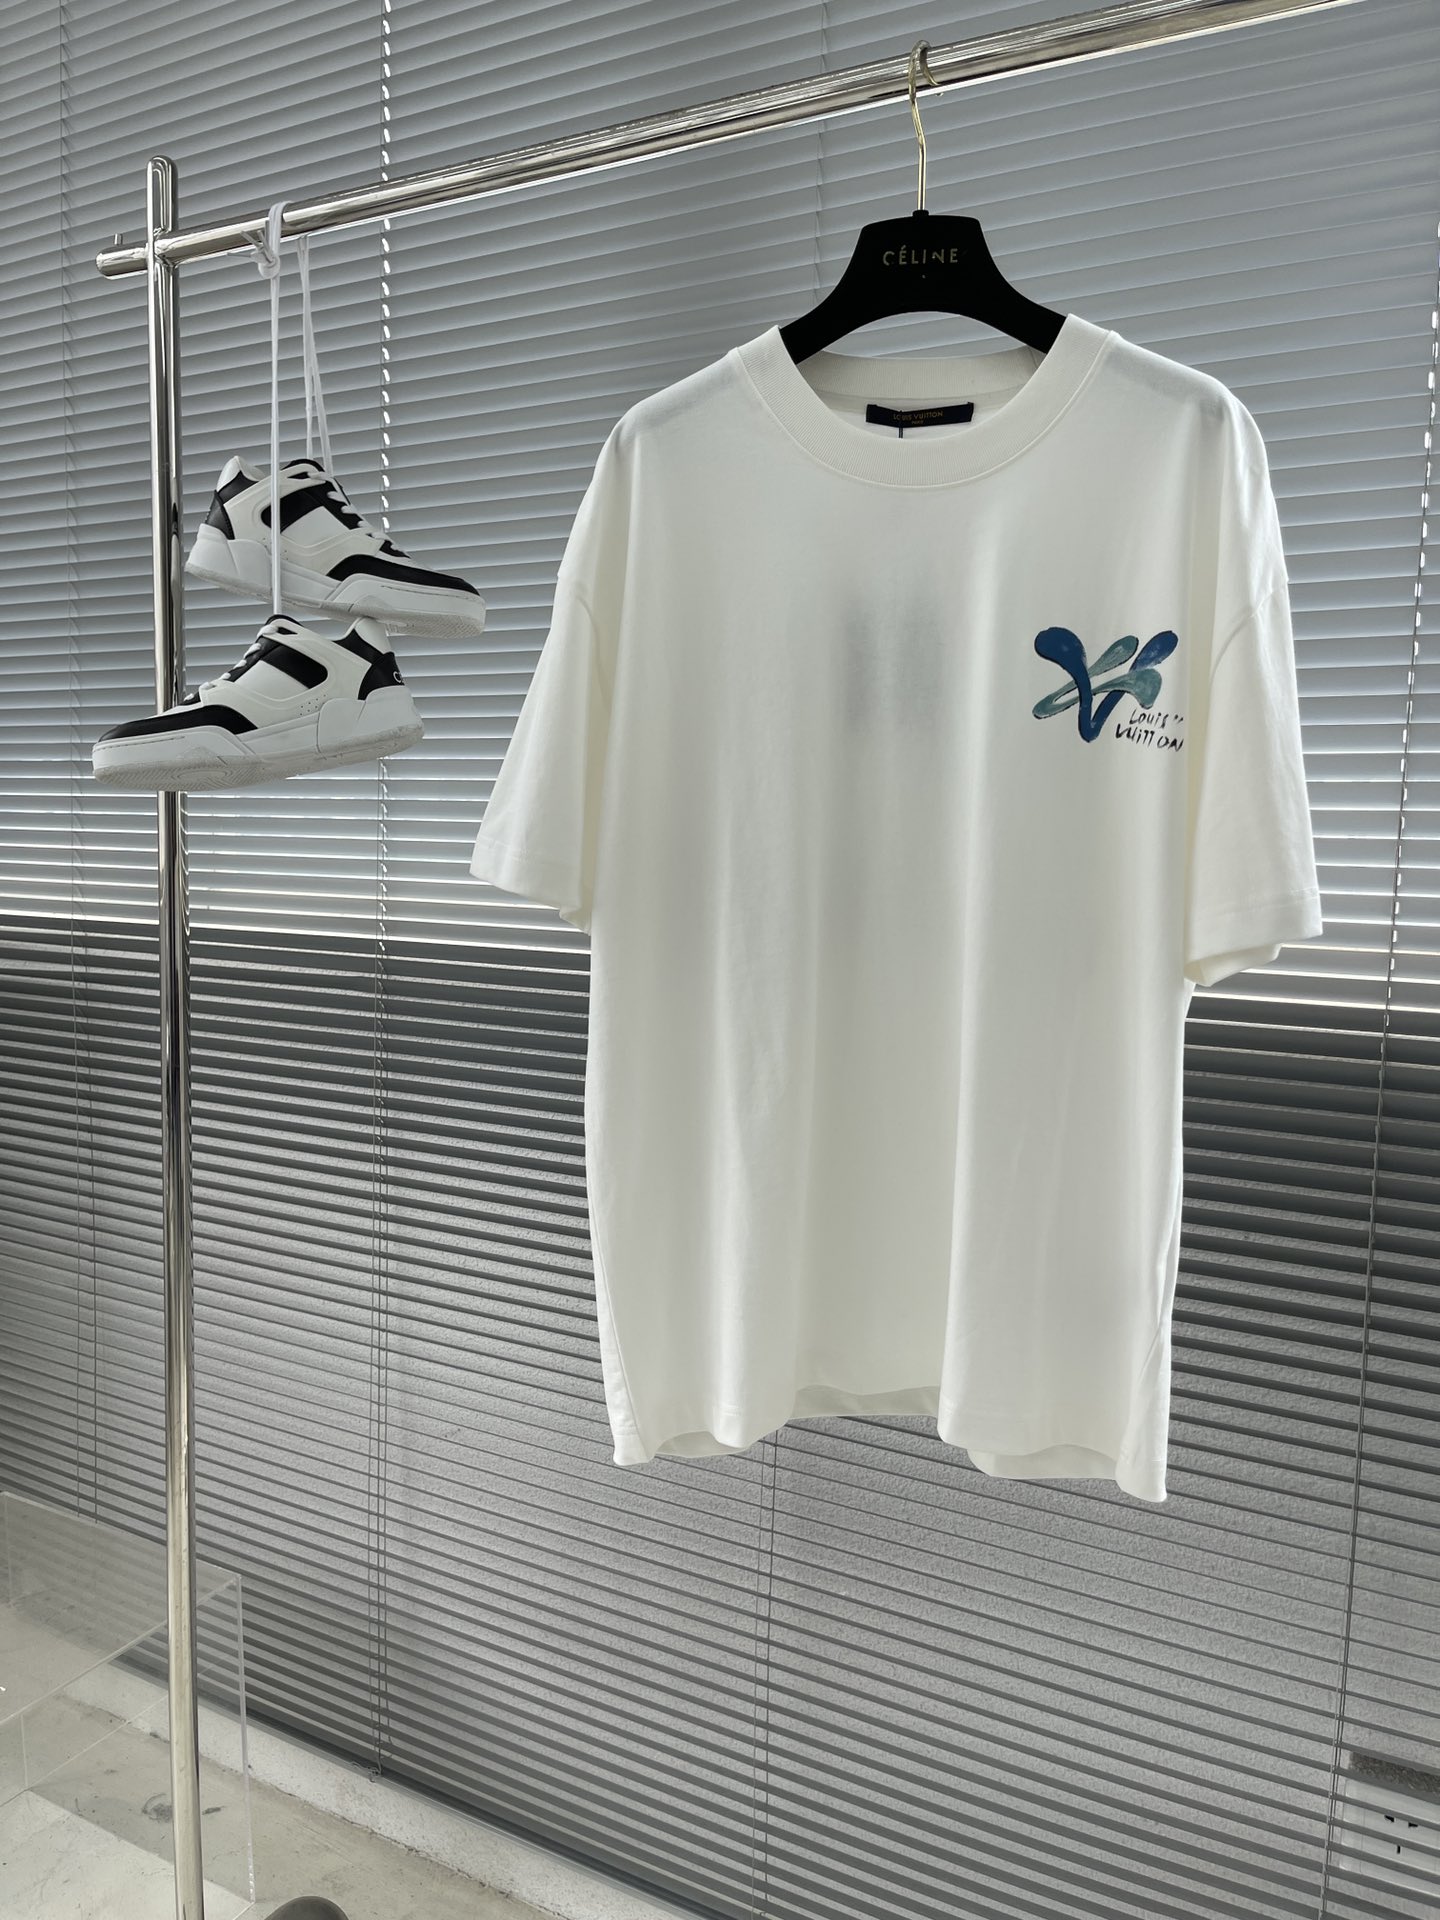 Louis Vuitton Clothing T-Shirt Black Doodle White Unisex Cotton Summer Collection Fashion Short Sleeve